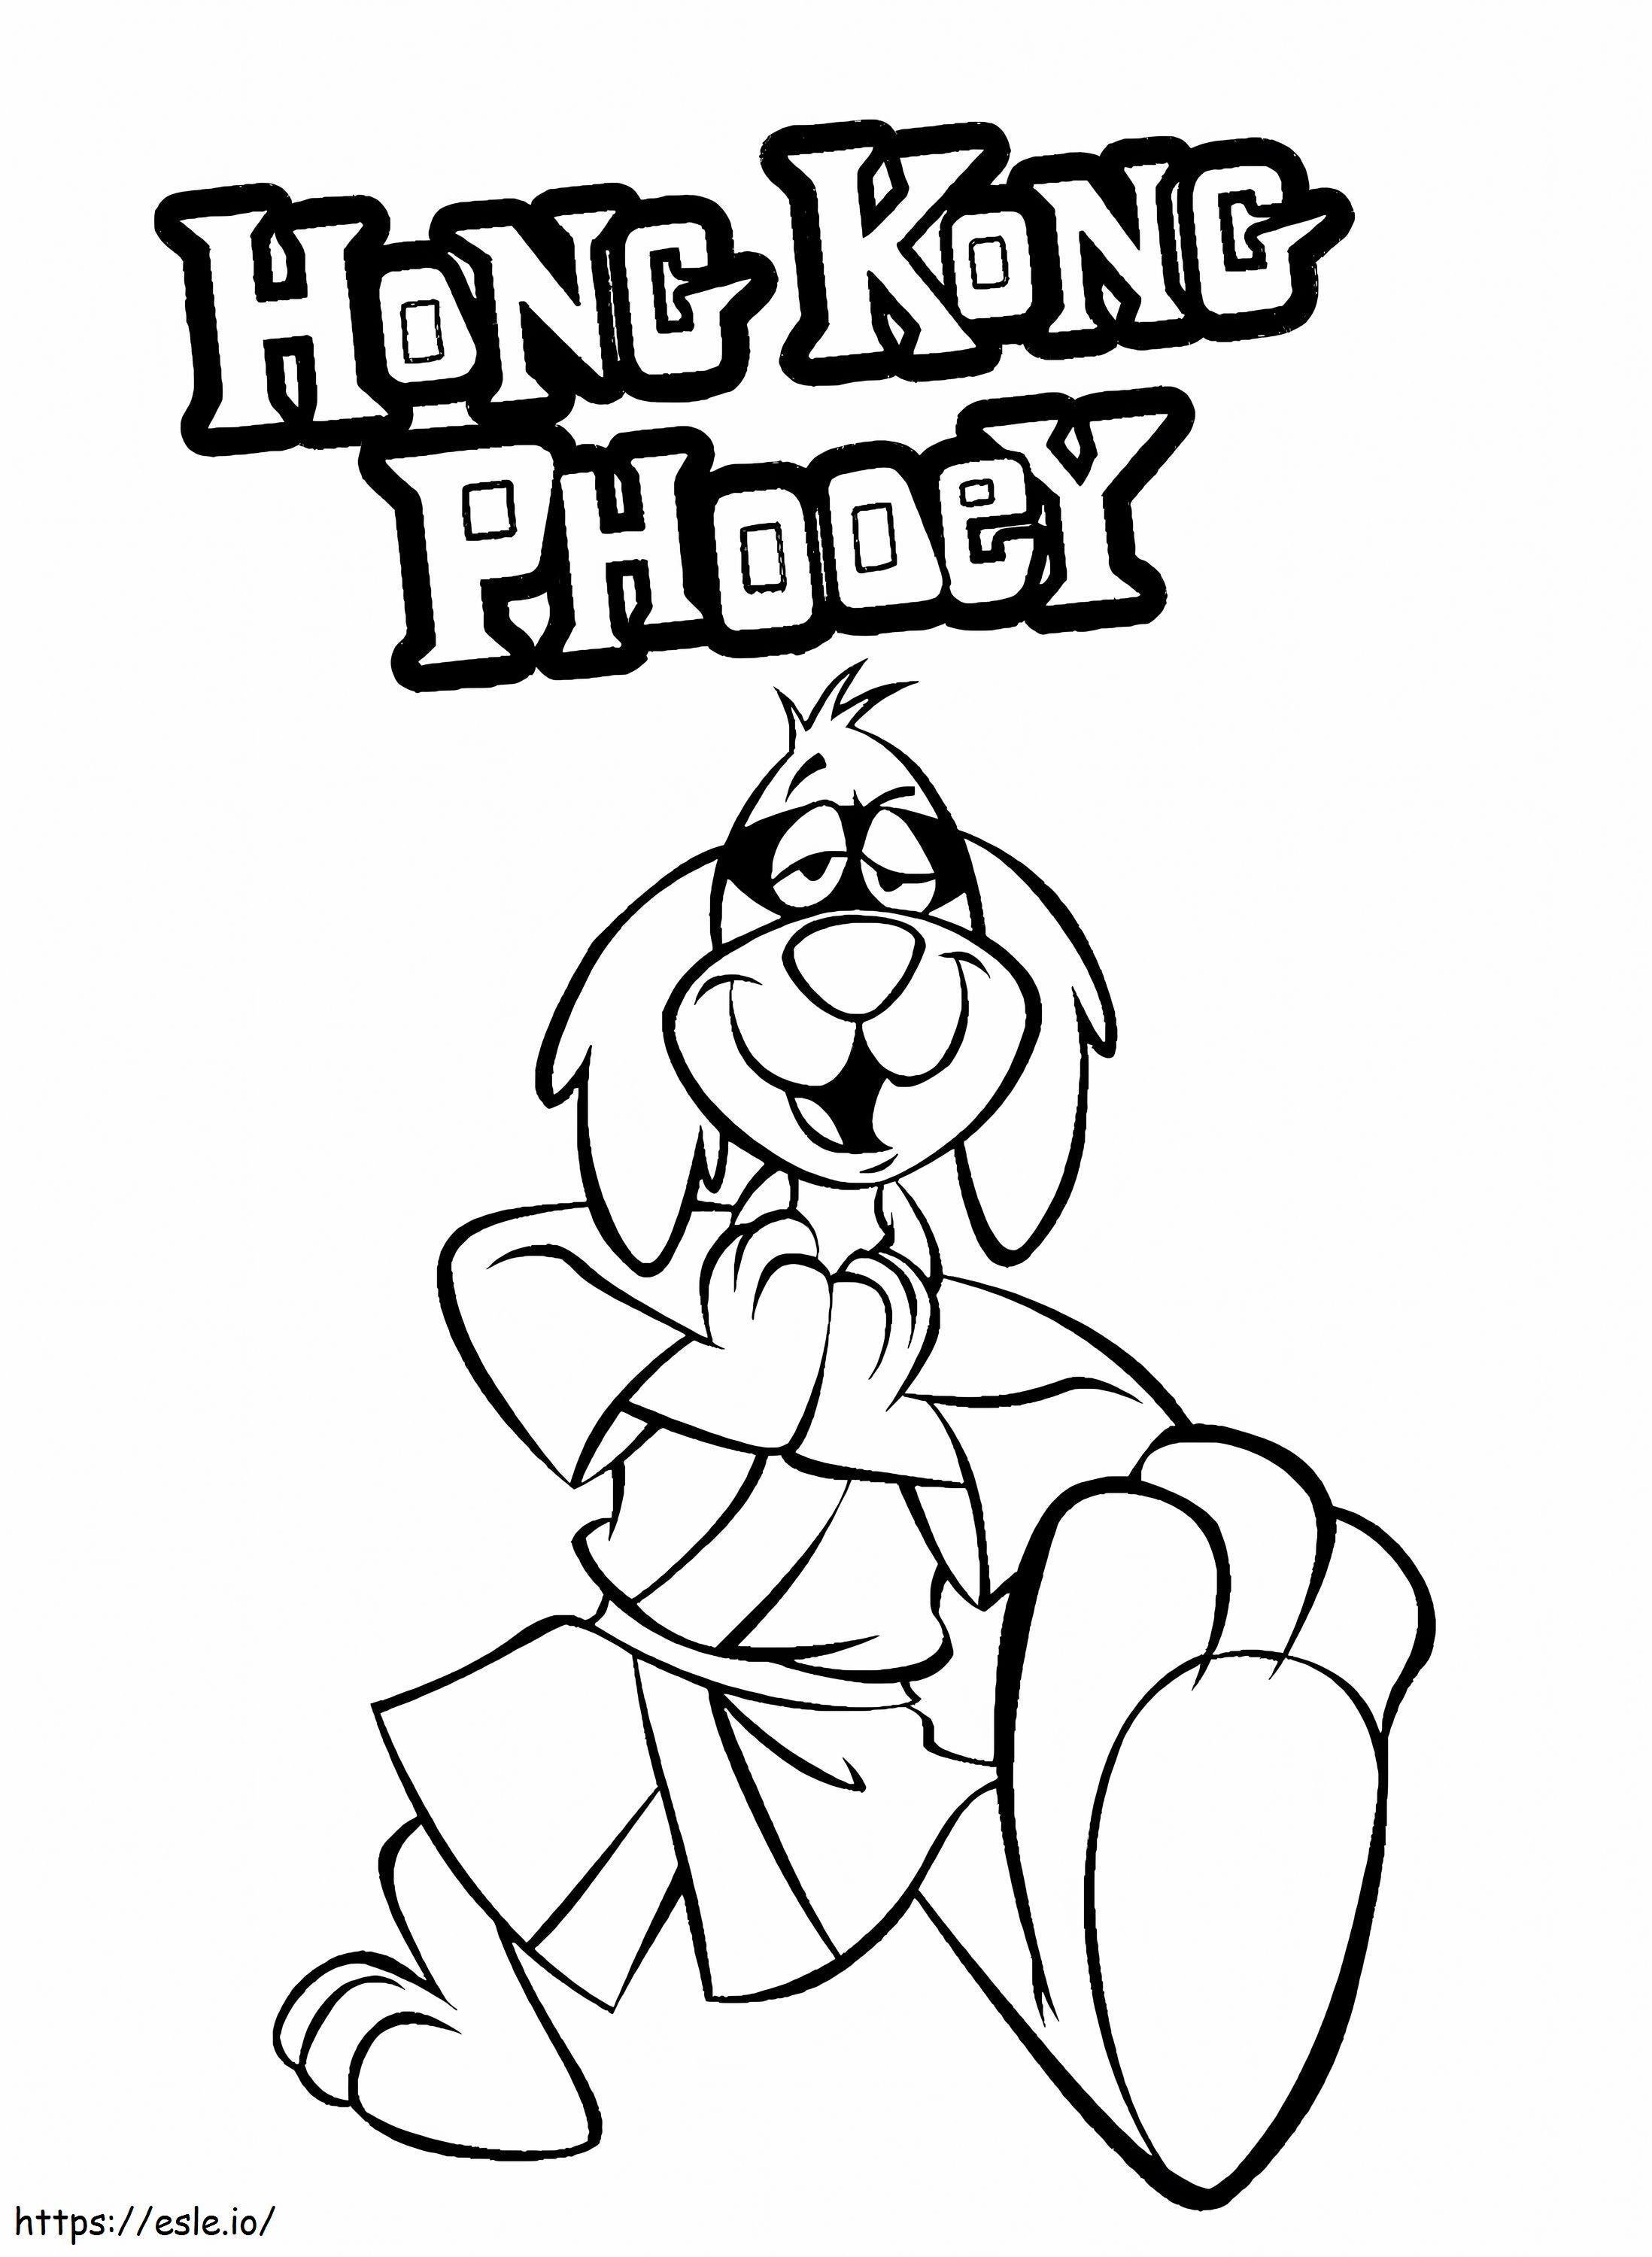 Hong Kong Phooey 3 kifestő